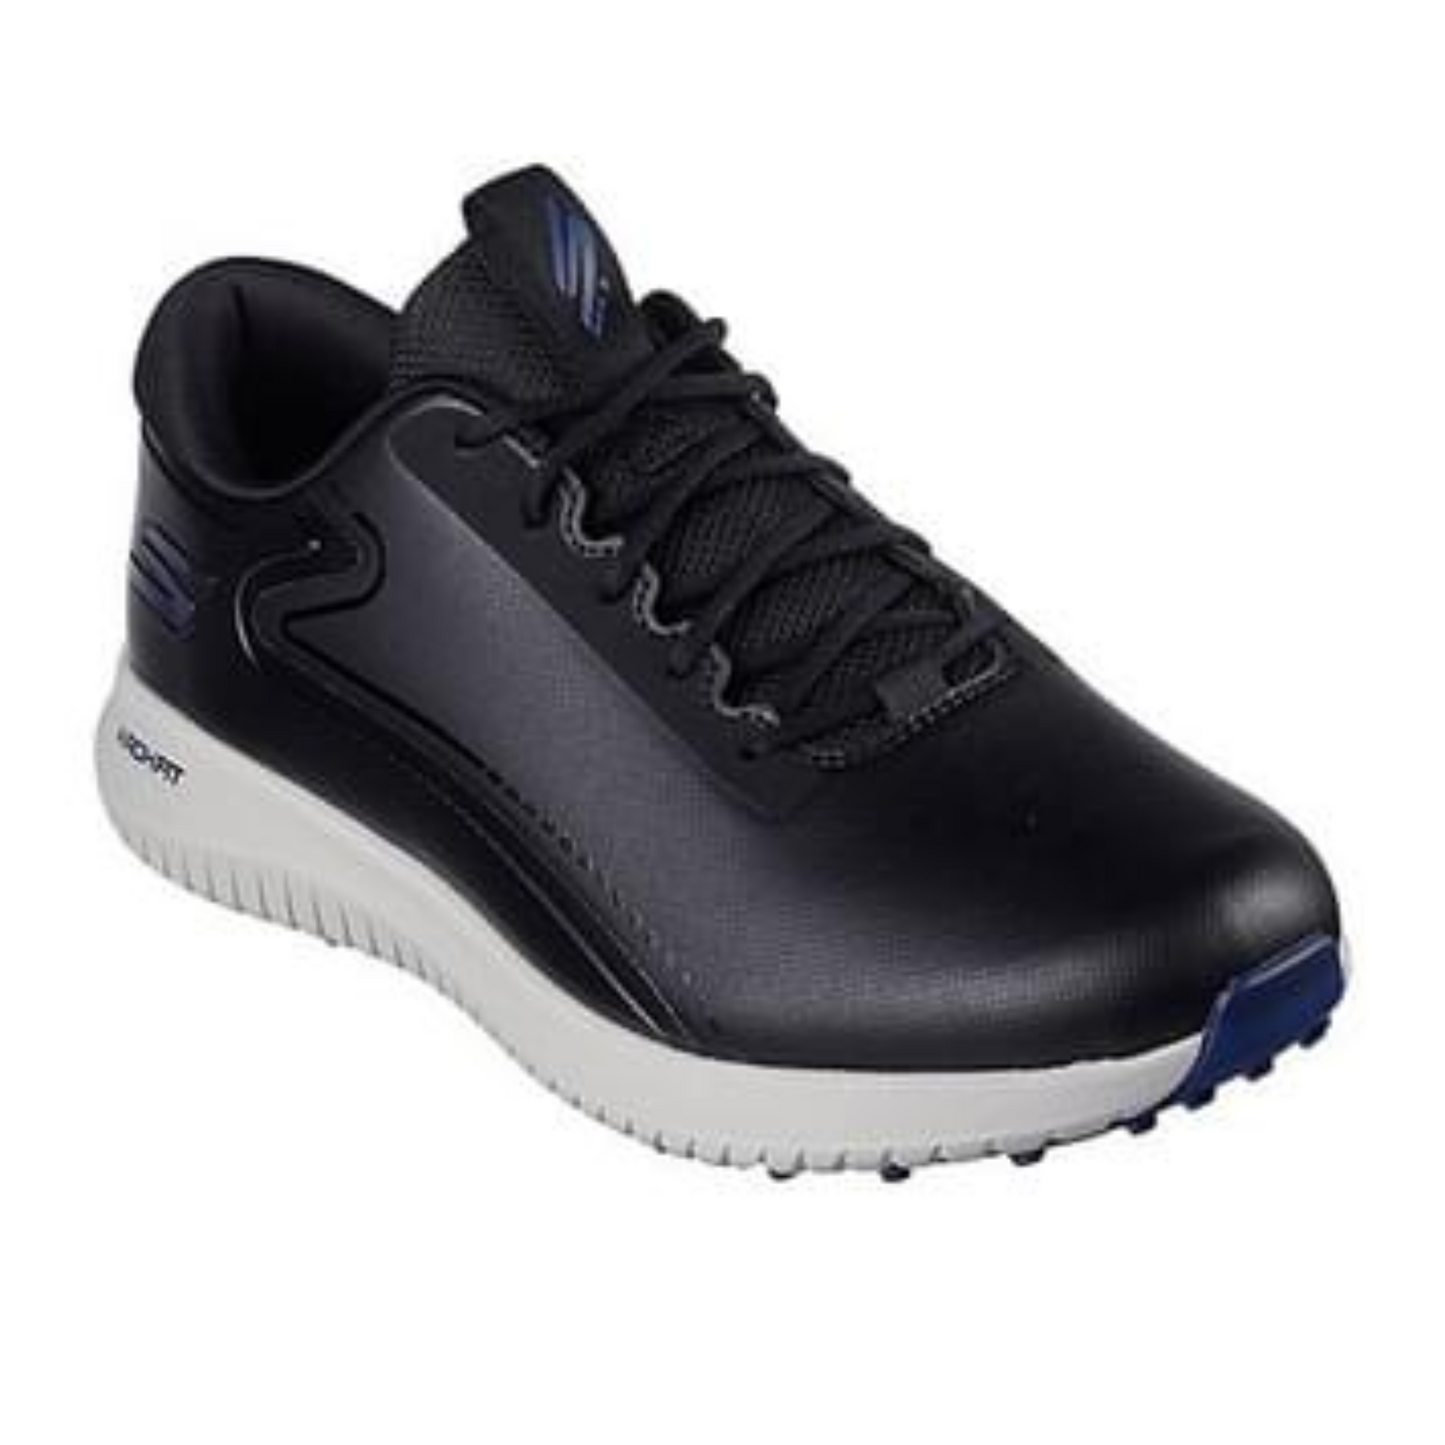 Skechers Go Golf Max 3 Spikeless Golf Shoes 214080 - Black Grey   